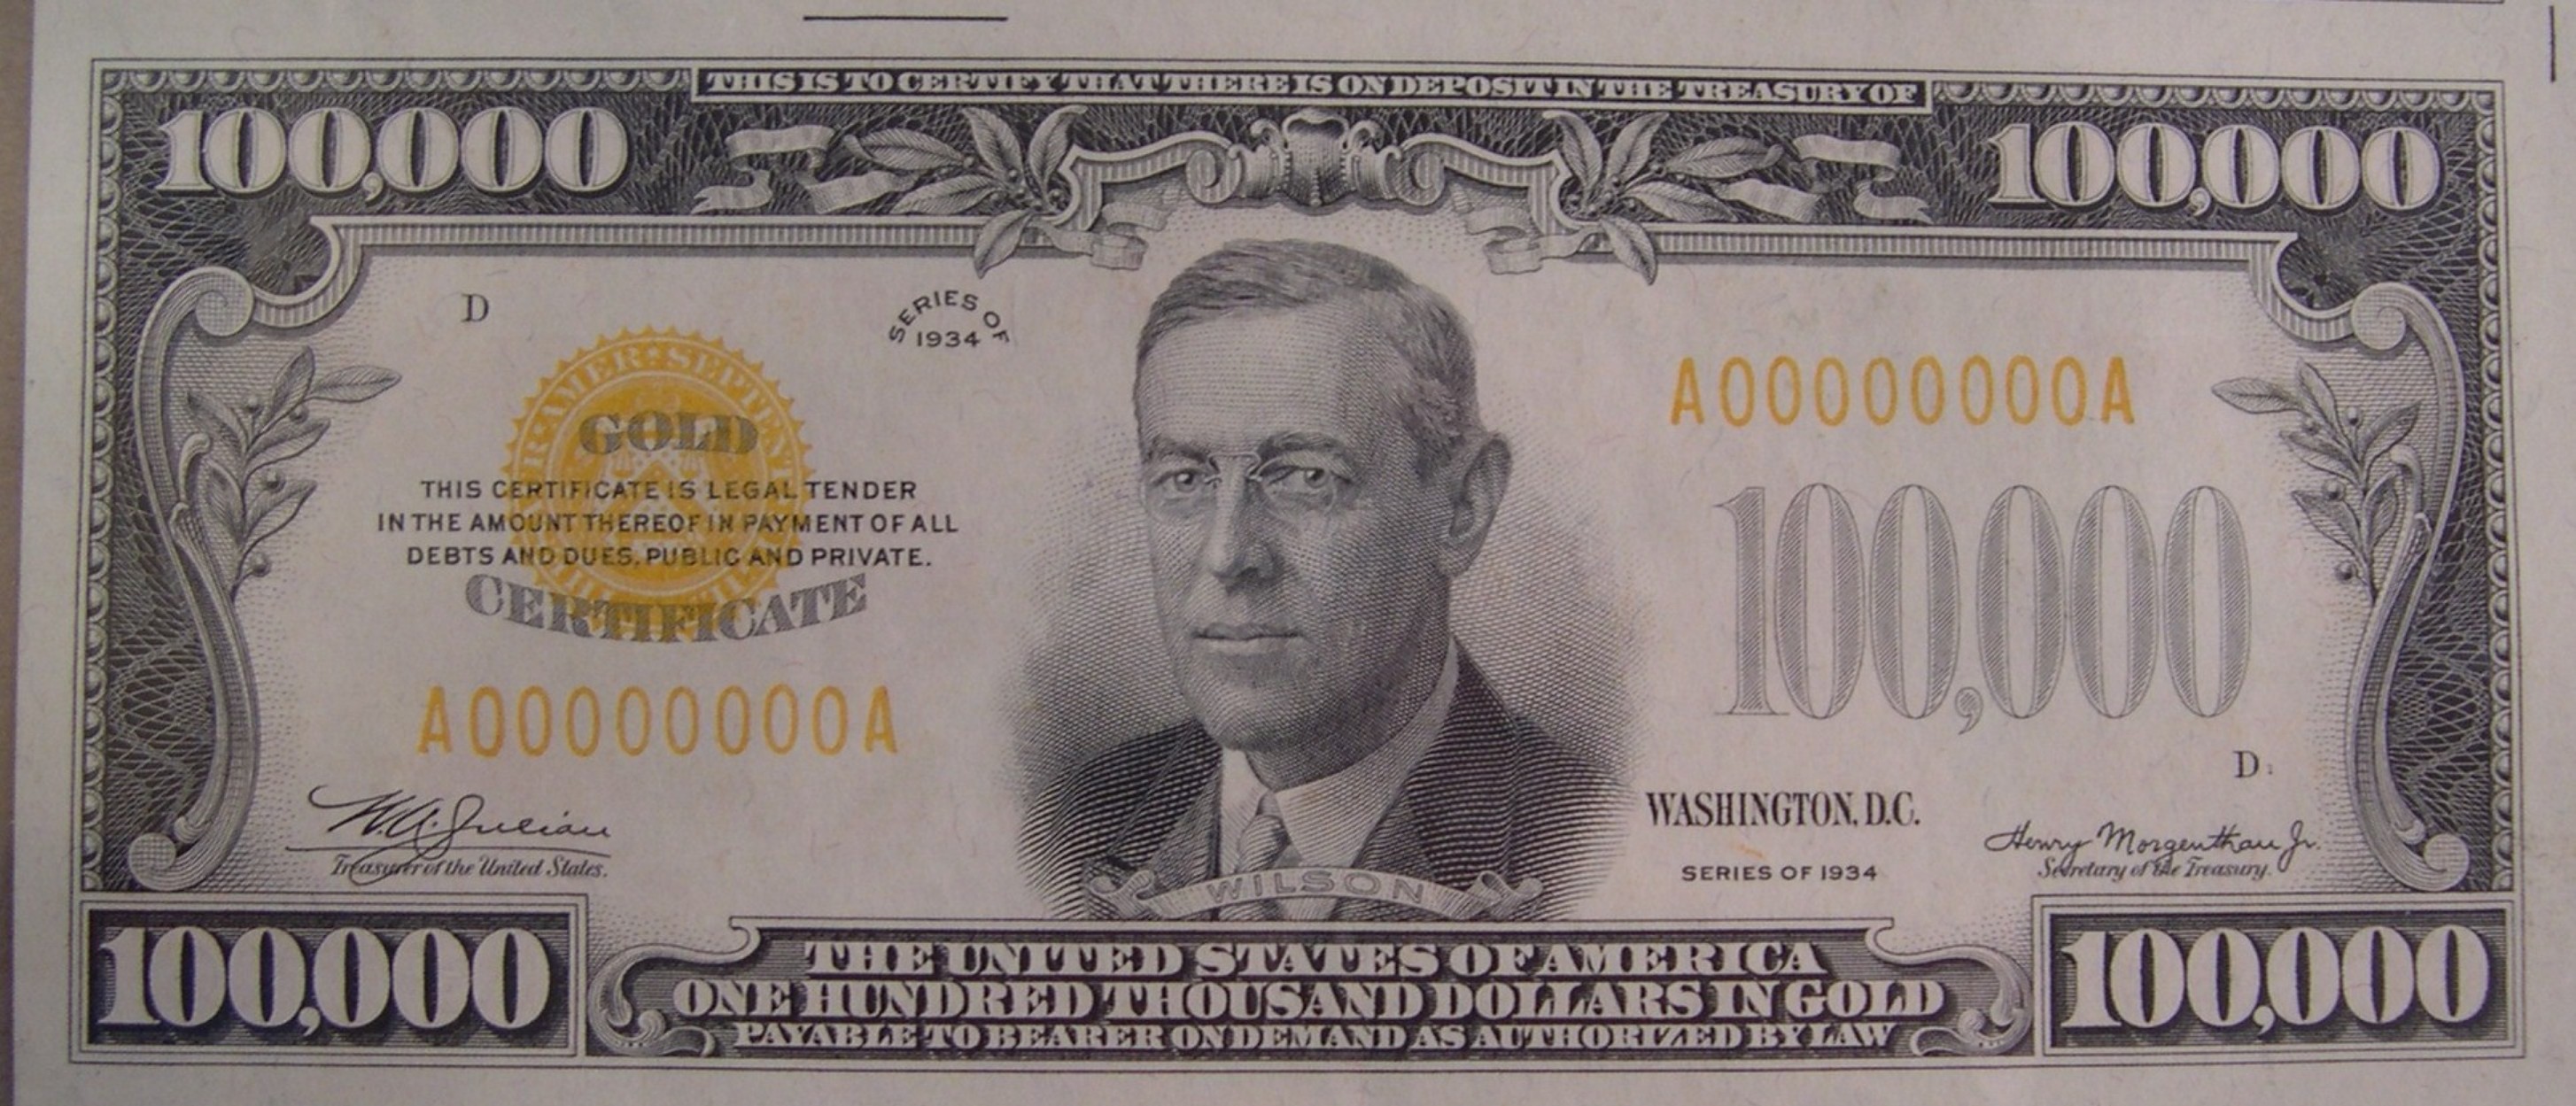 ipicture of a one billion dollar bill